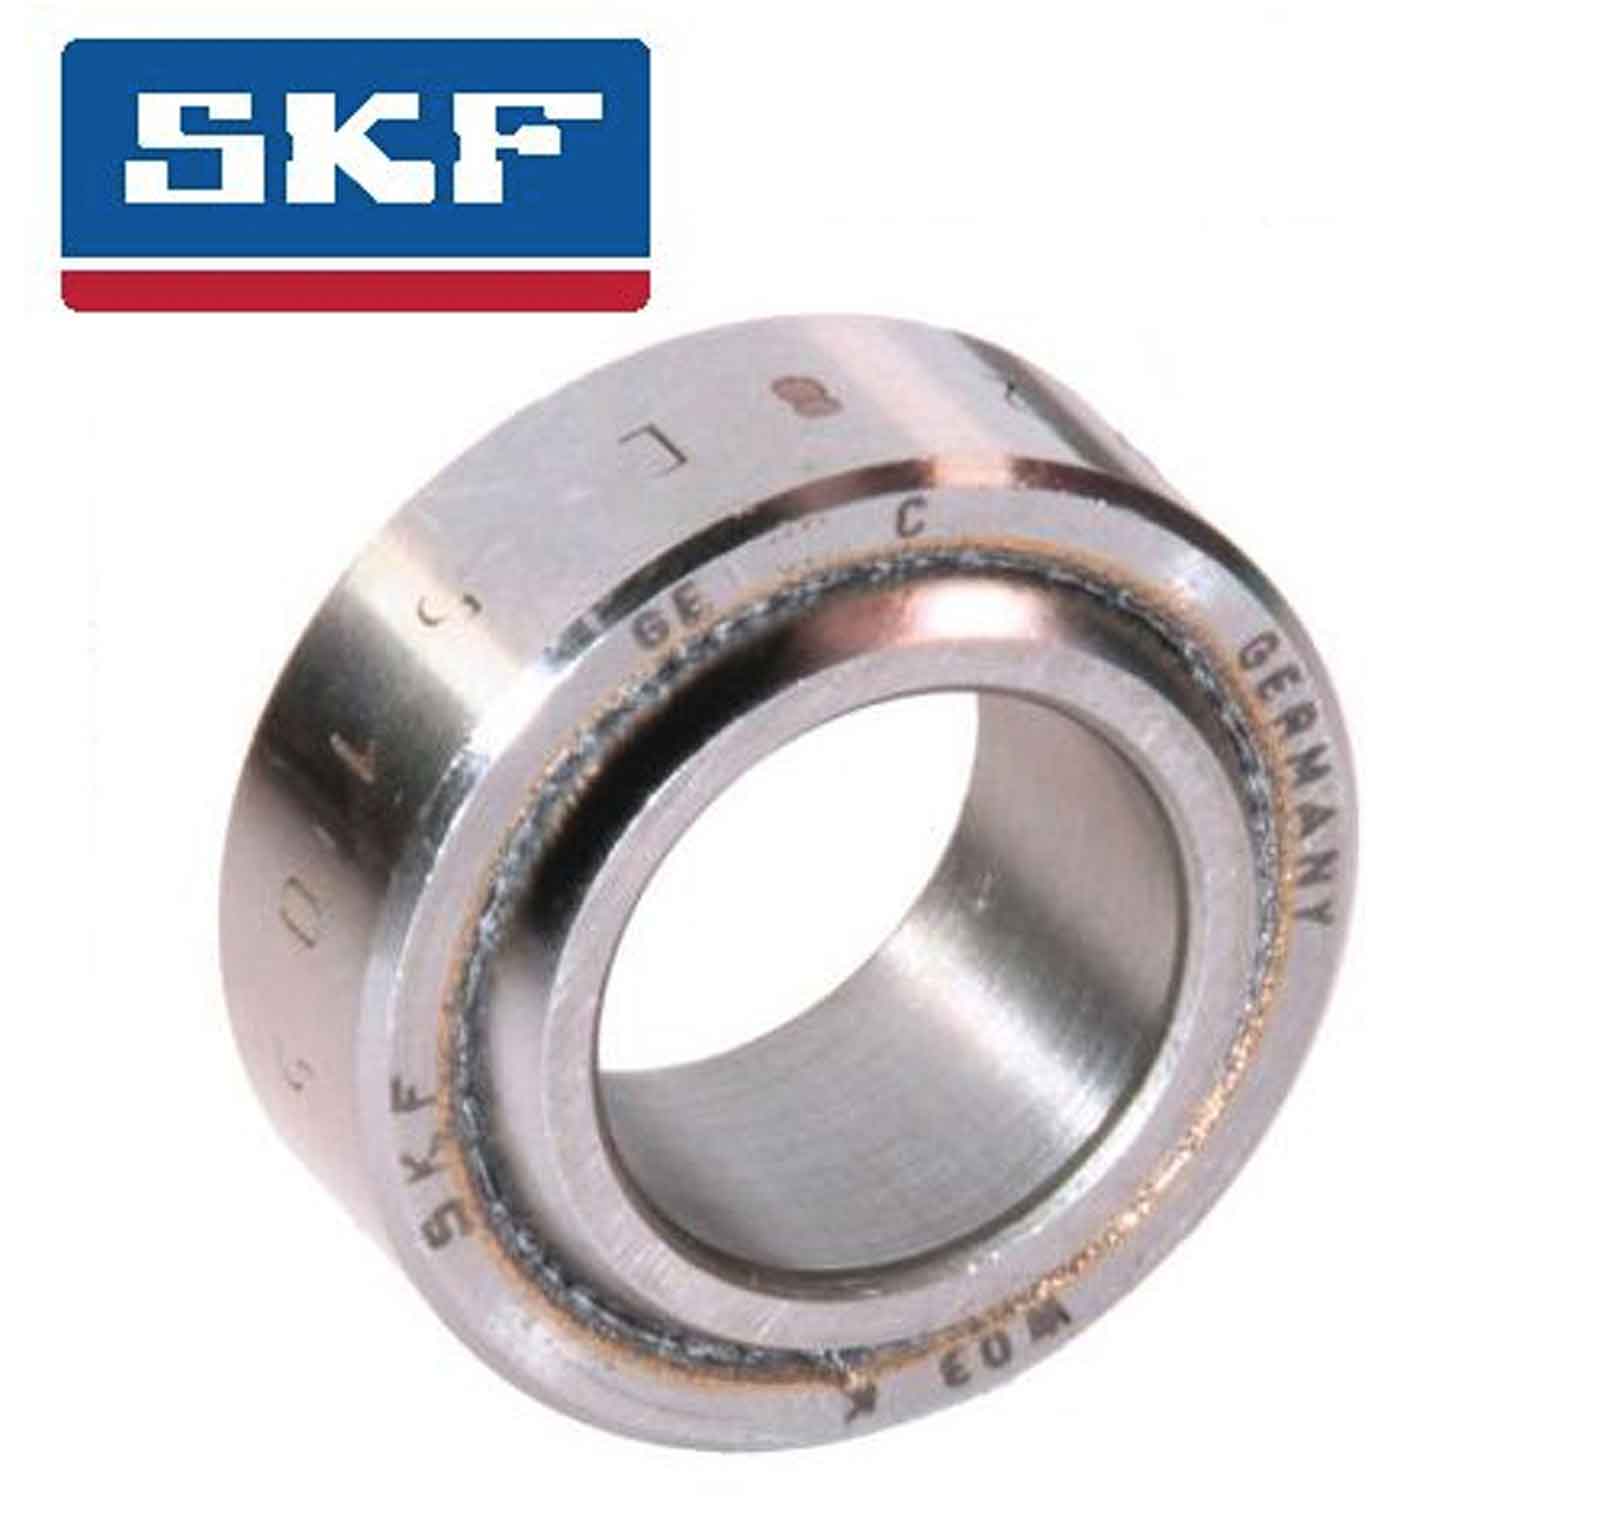 SKF M15 Spherical Plain Bearing (GEH15C)